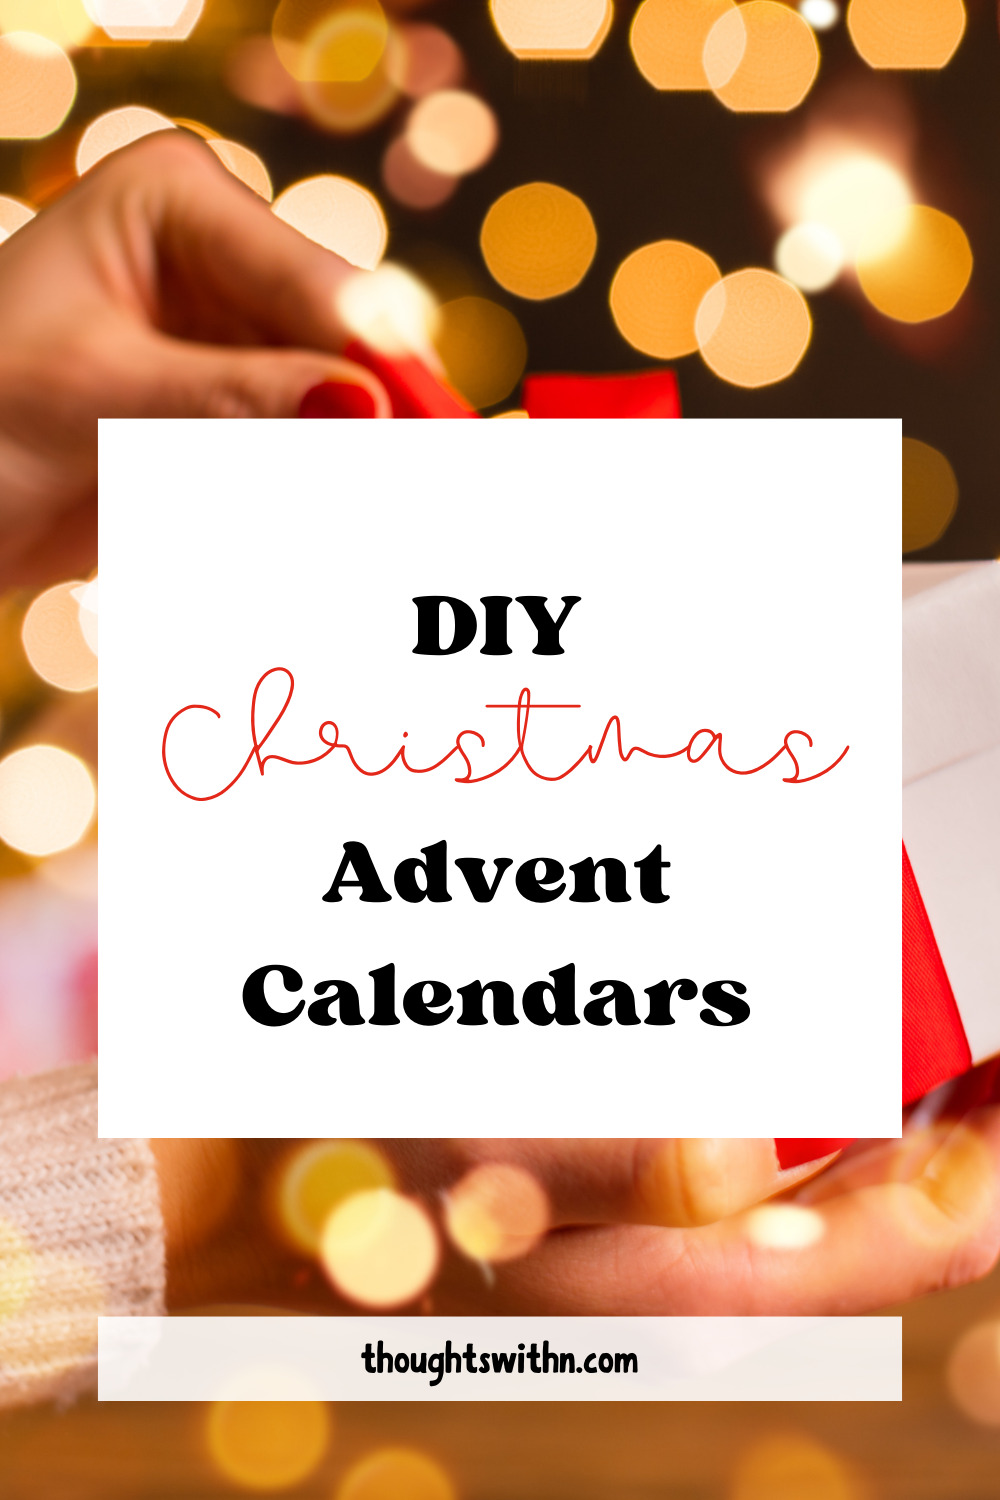 DIY Advent Calendar ideas